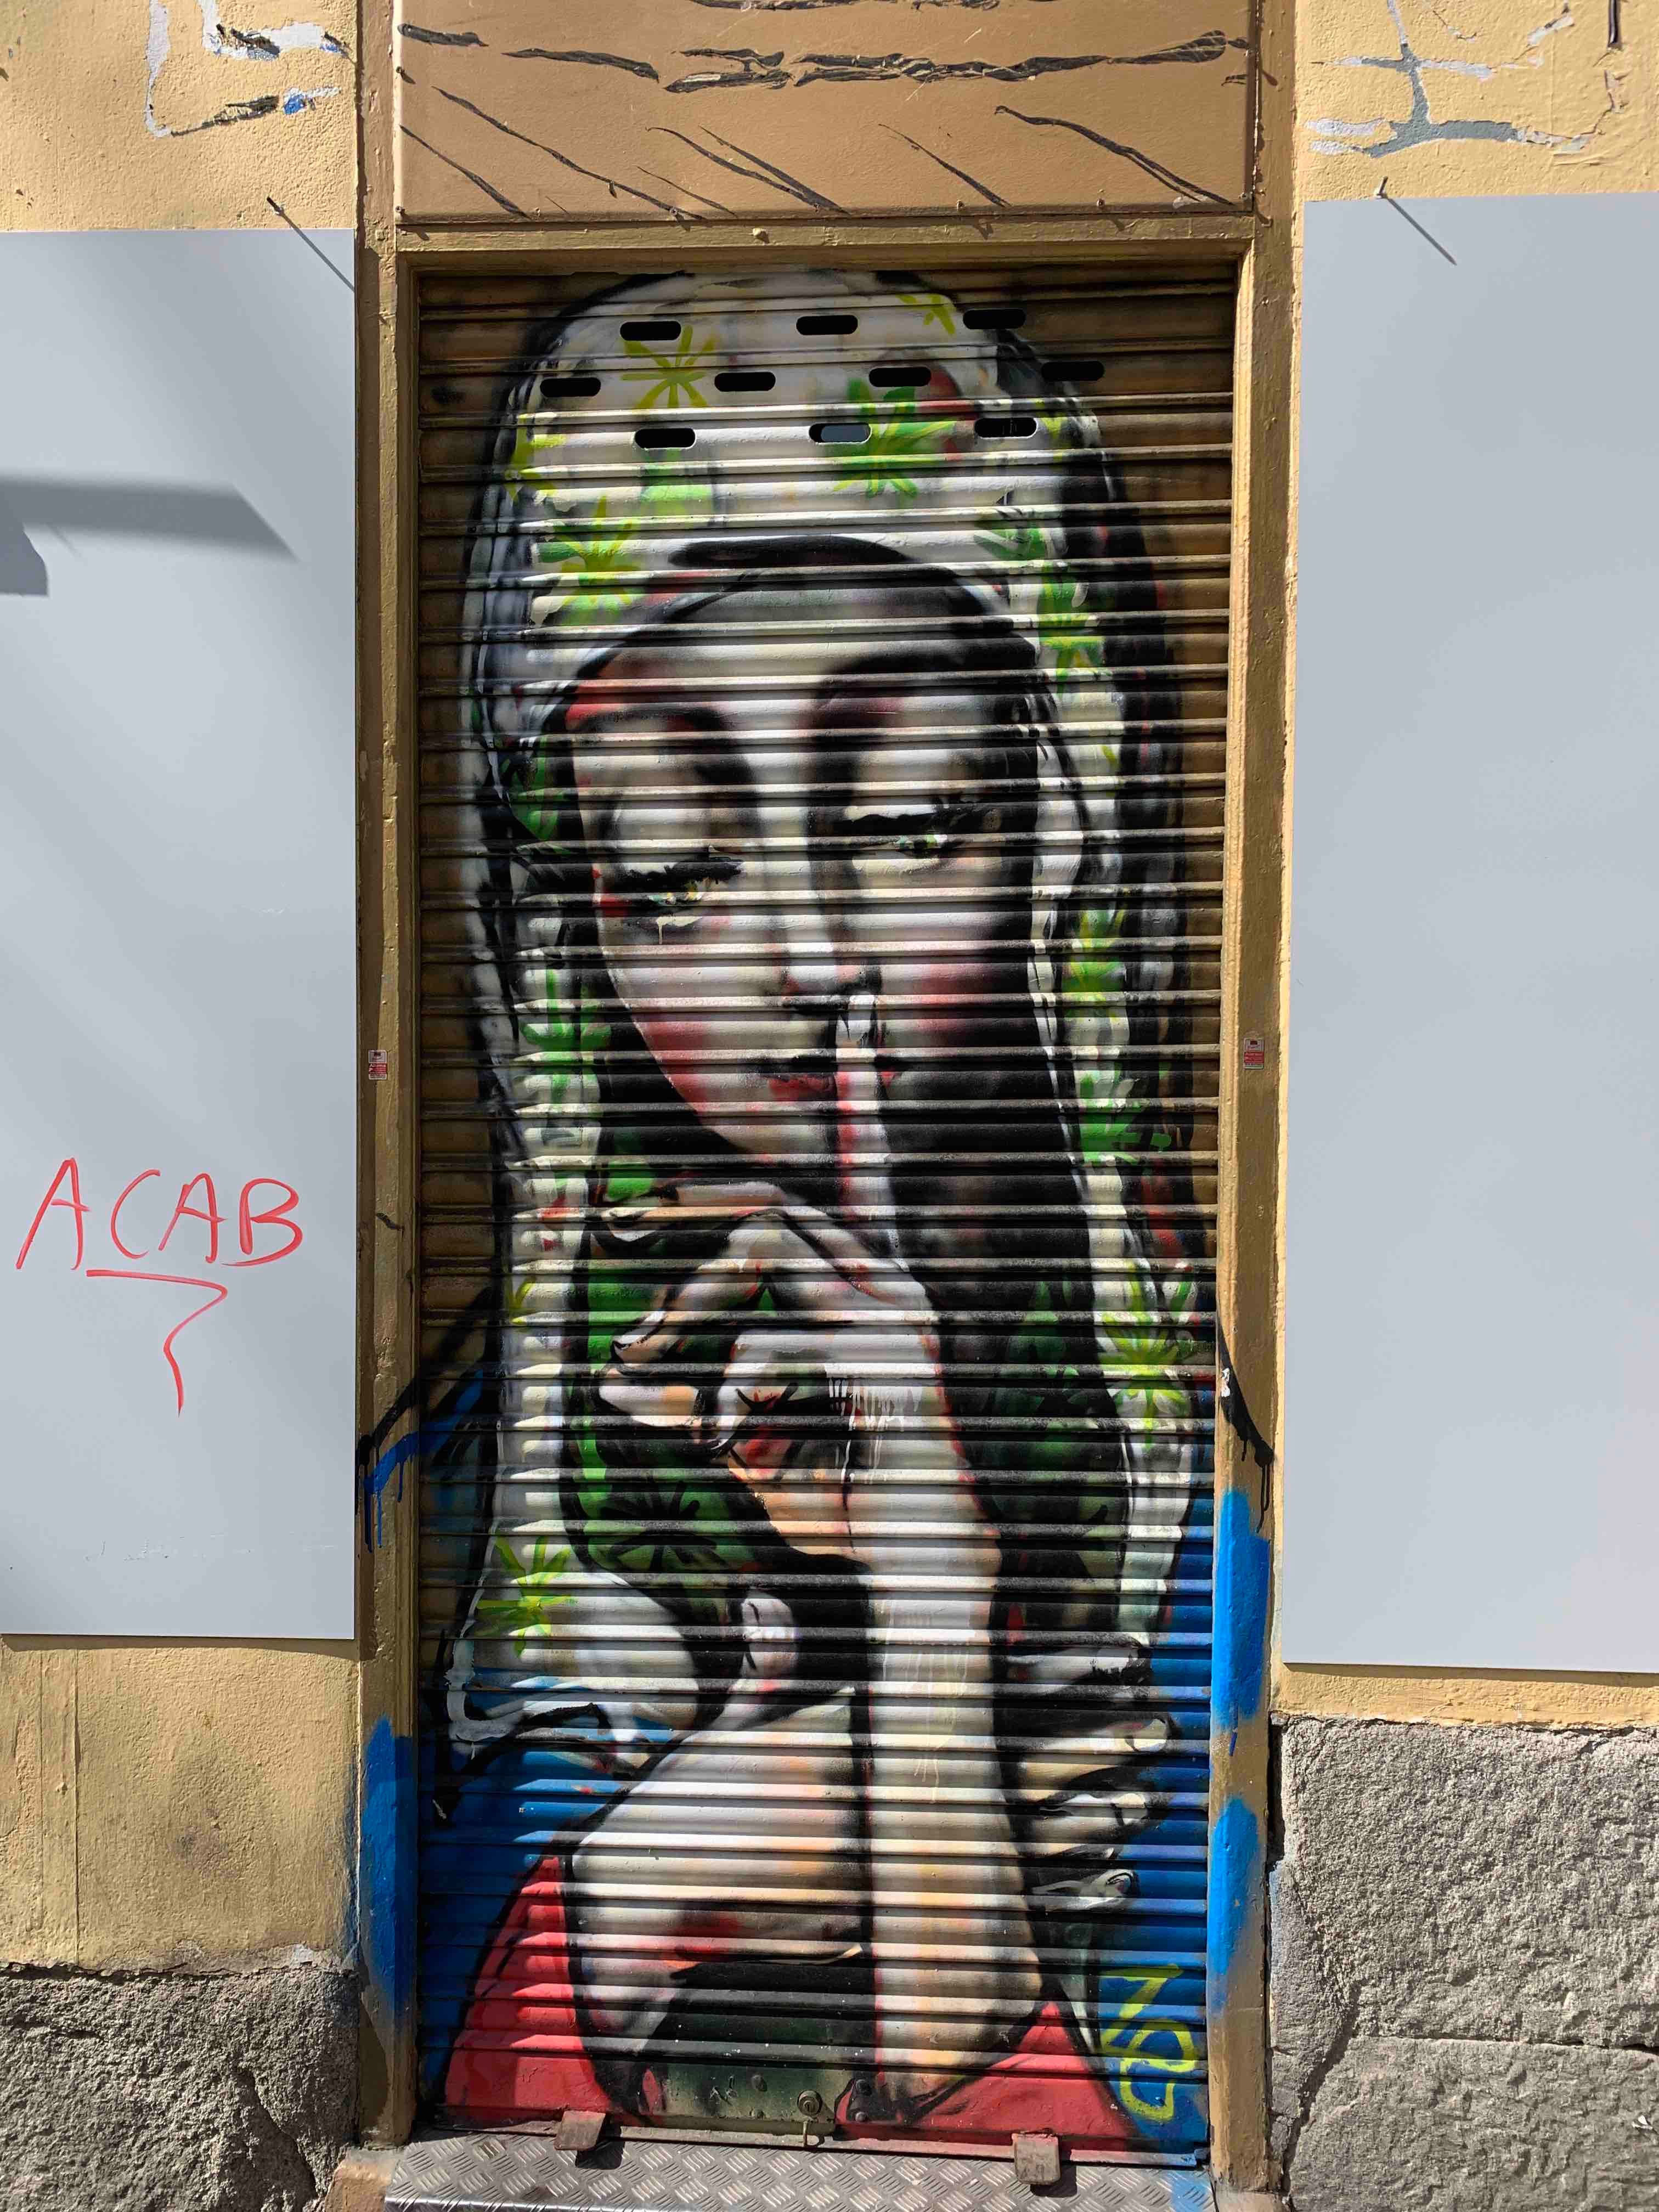 Graffiti 3851  captured by Julien in Madrid Spain